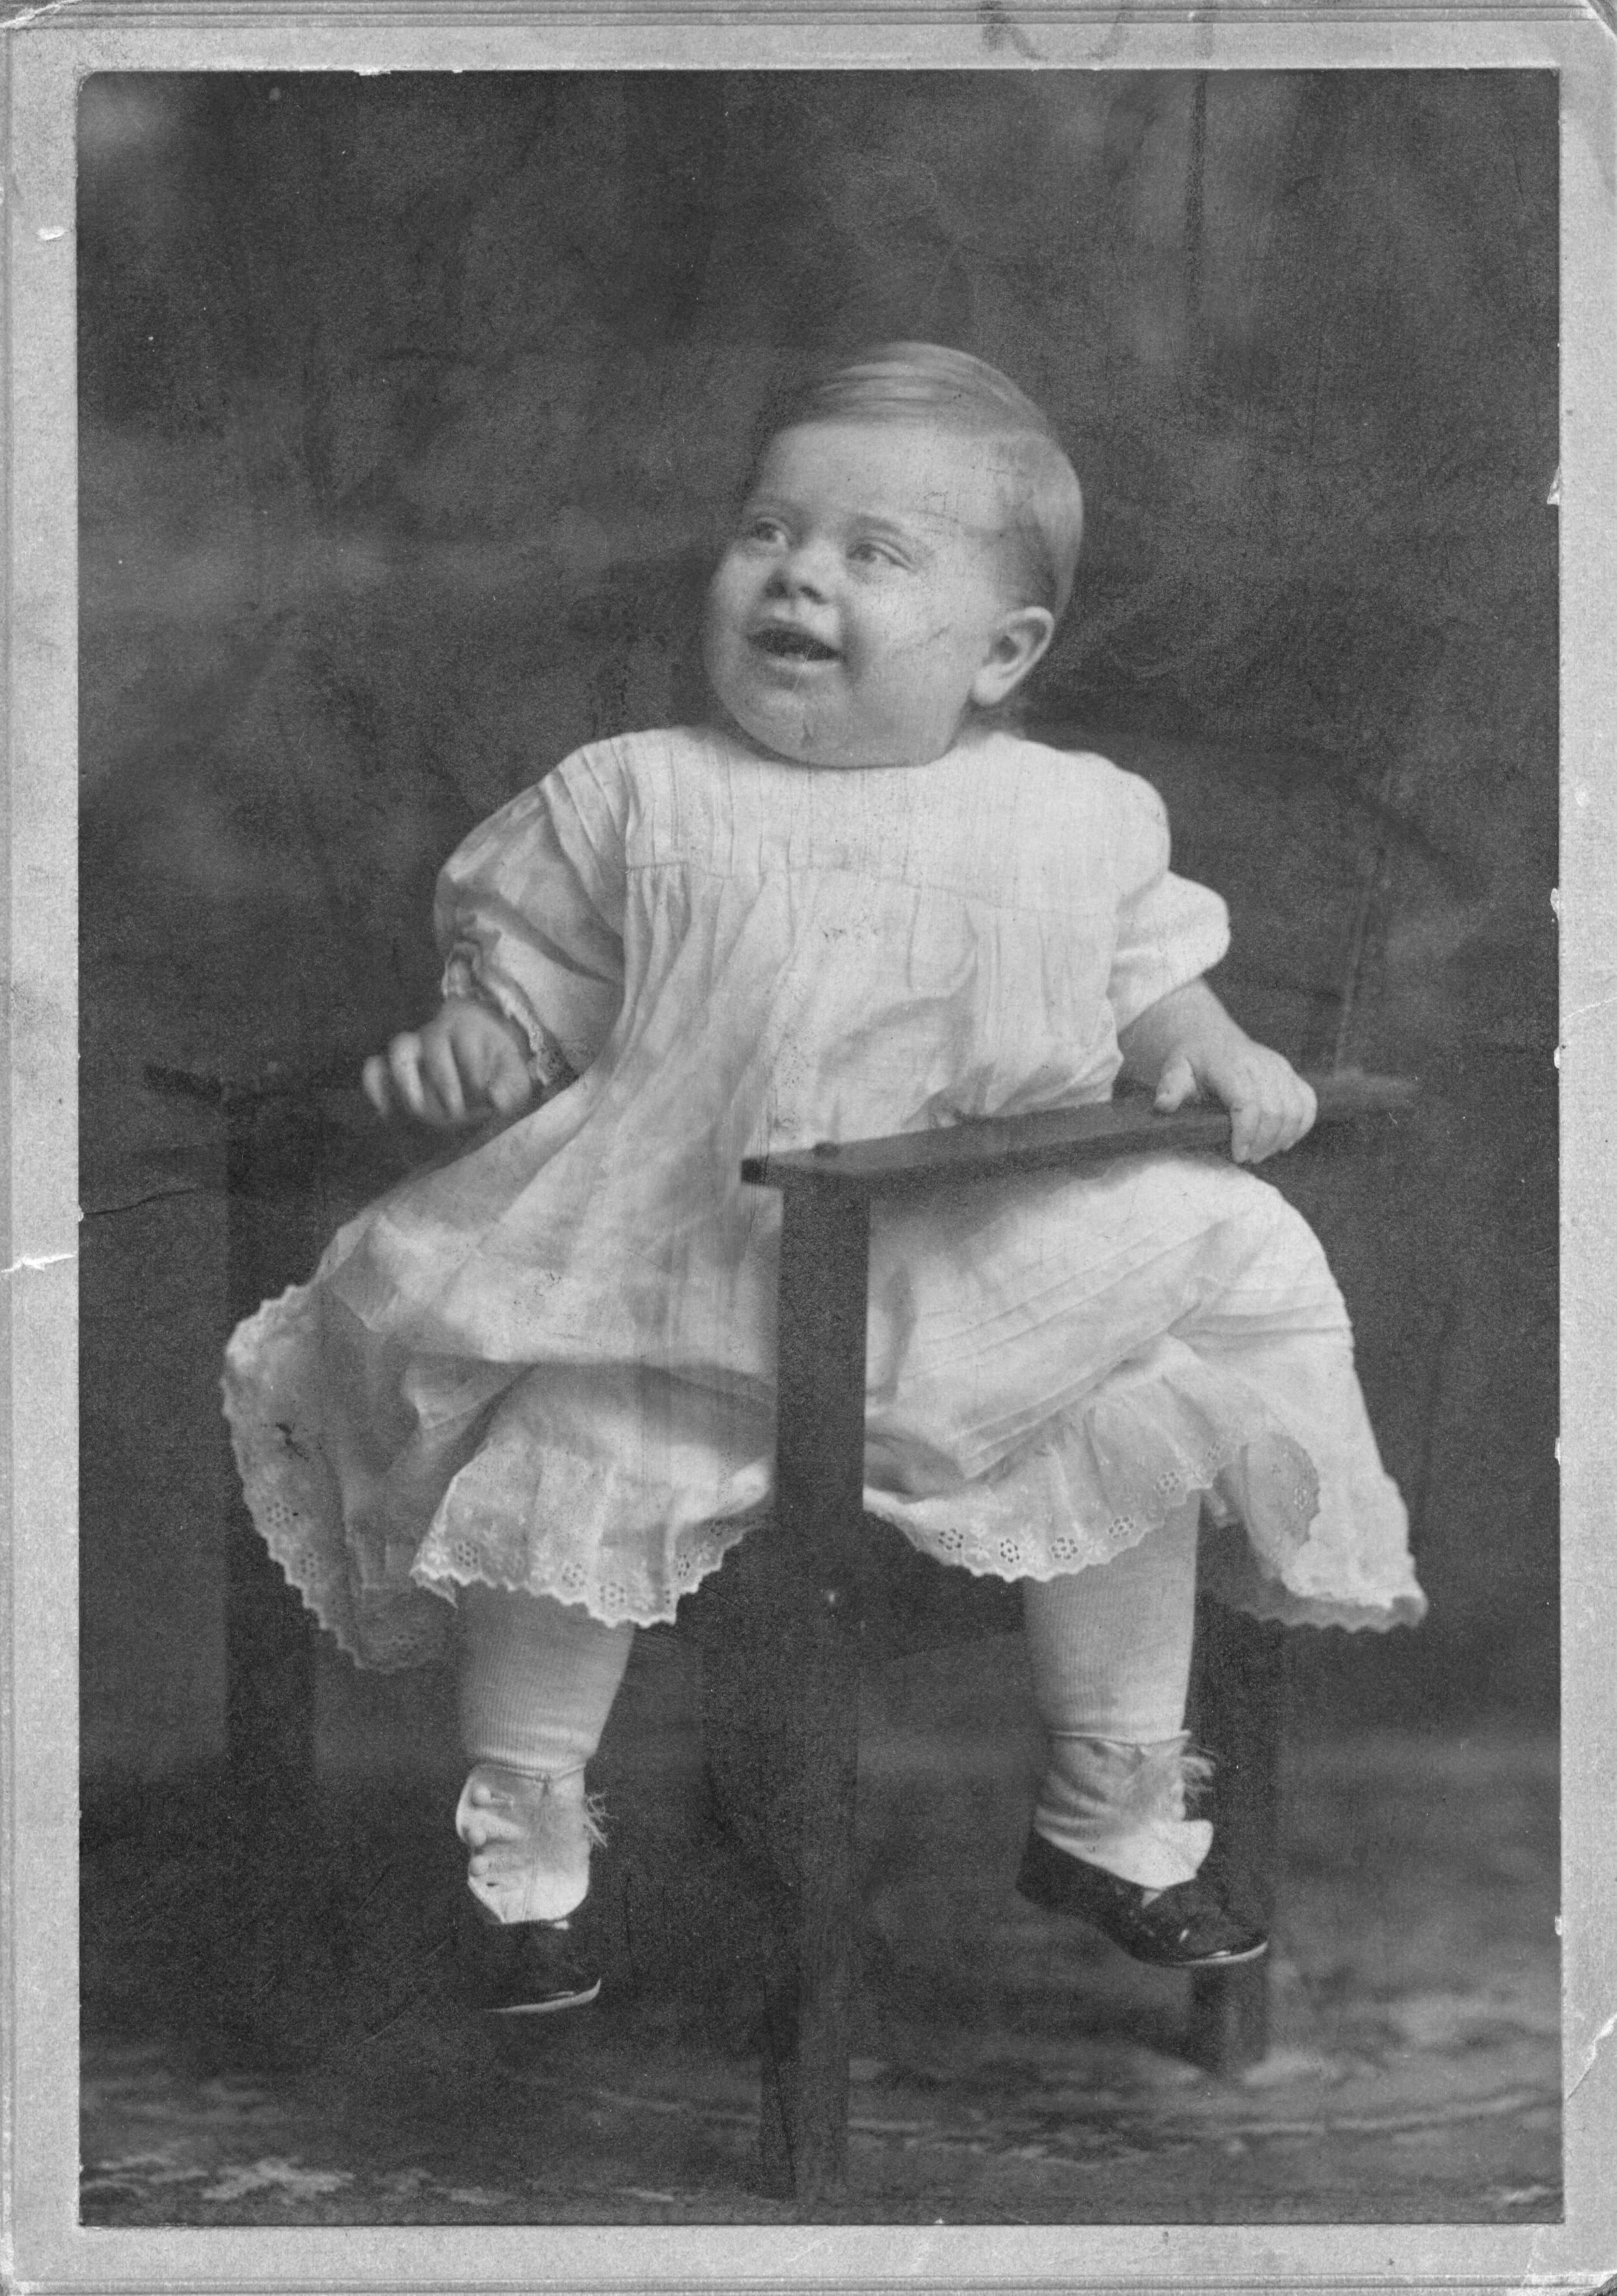 Margaret Schwietzer  picture take 1914, she was 1 year old.